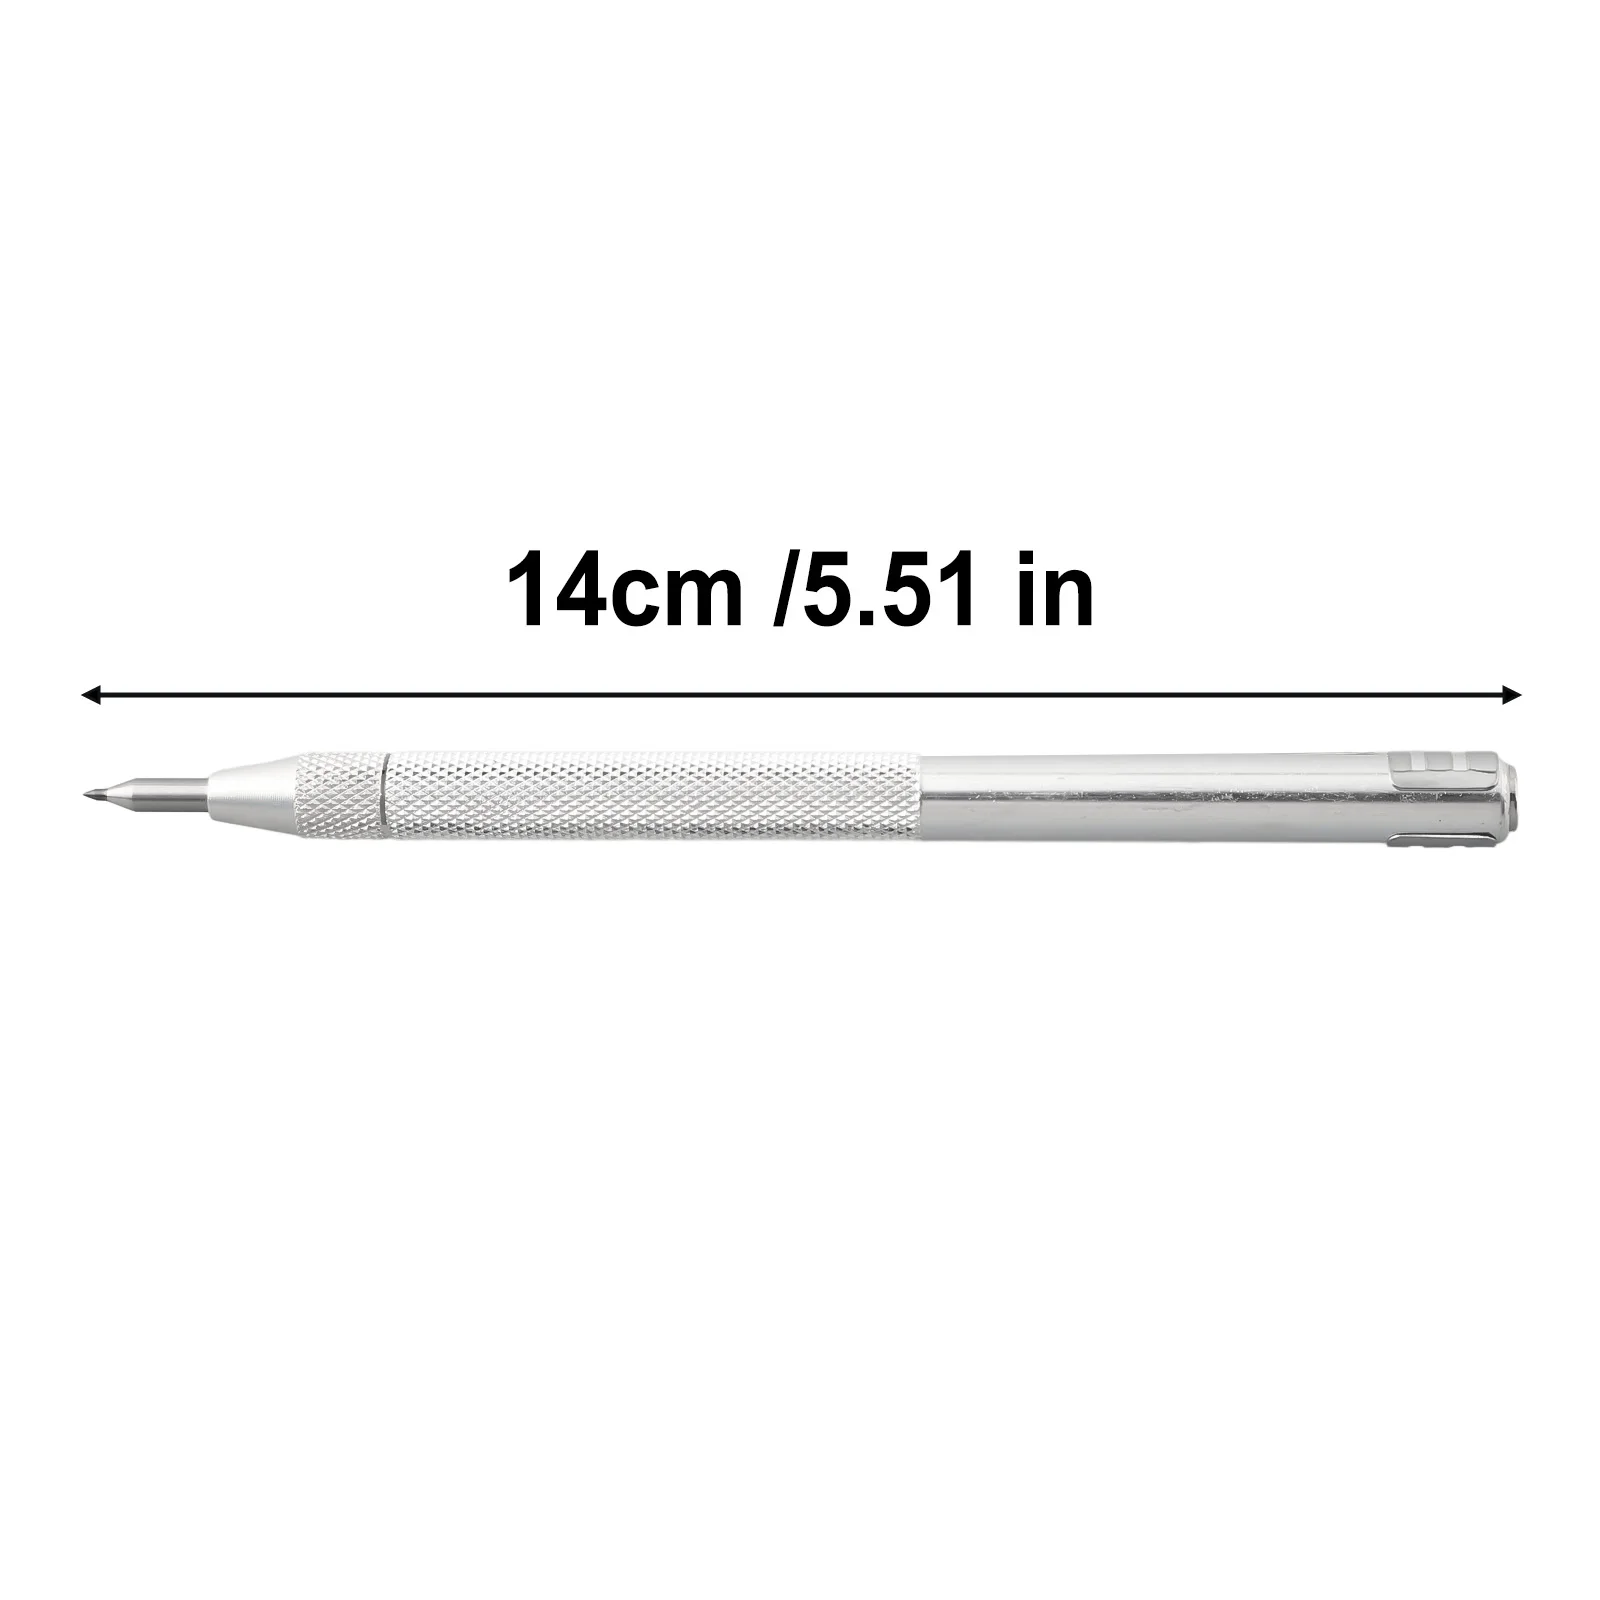 

Scriber Pen Tungsten Carbide Engraving Pen Marking Carving Scribing Marker Tools For Glass Ceramic Metal Wood Hand Tools 1